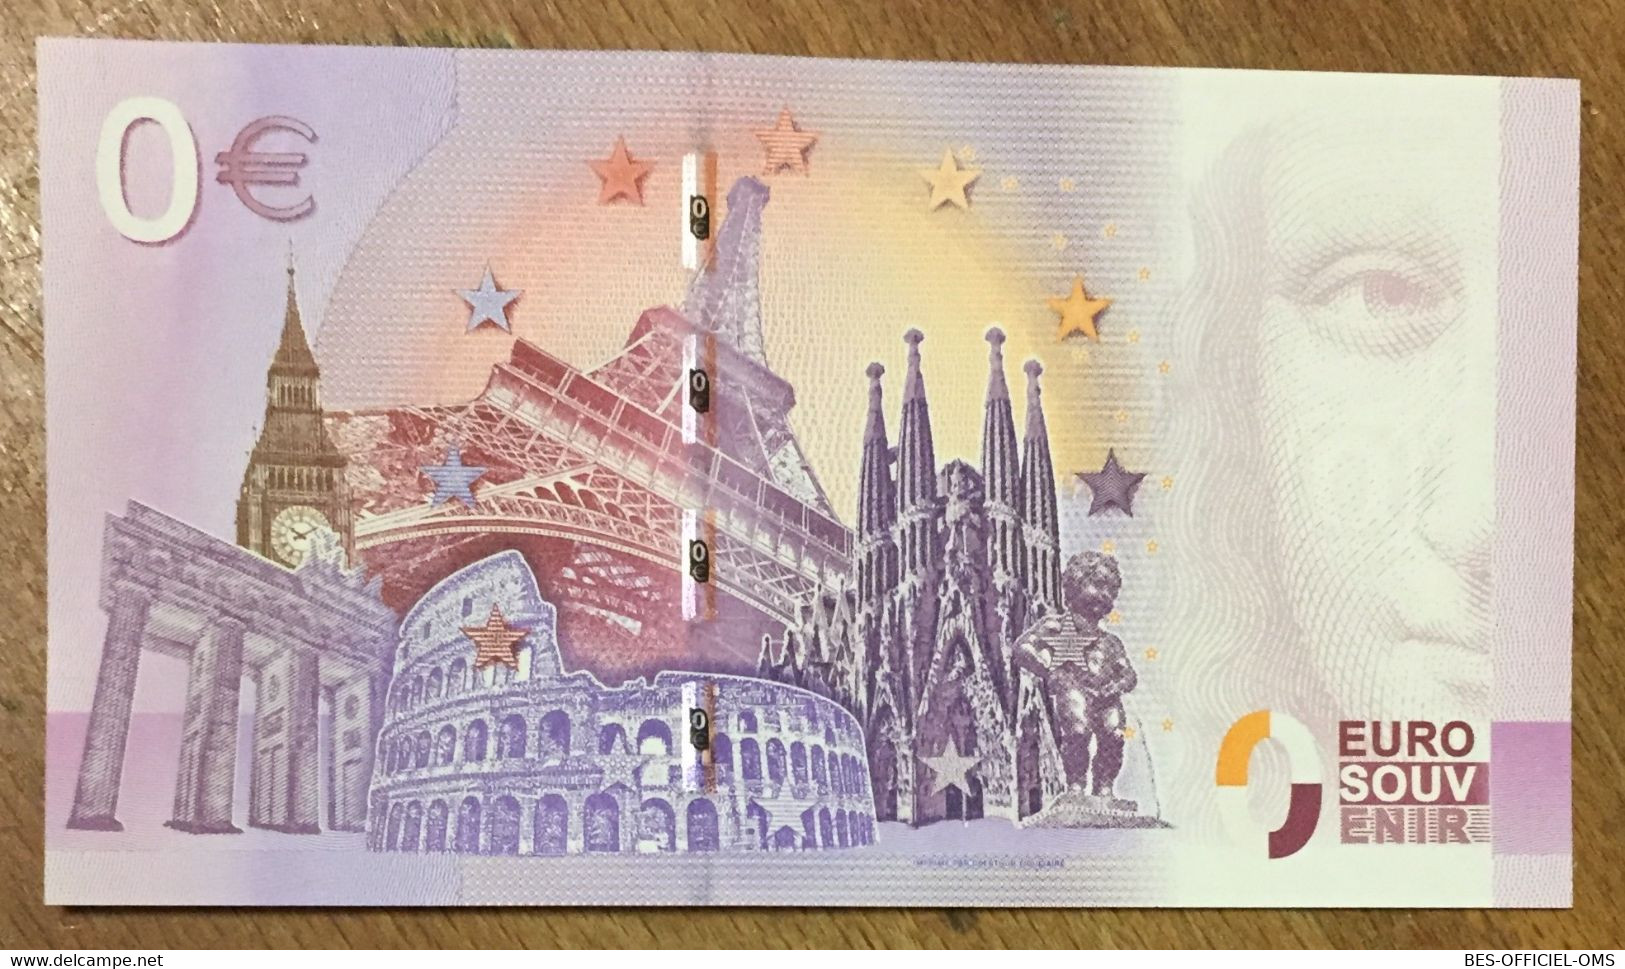 2016 BILLET 0 EURO SOUVENIR DPT 55 MÉMORIAL DE VERDUN ZERO 0 EURO SCHEIN BANKNOTE PAPER MONEY BANK PAPER MONEY - Private Proofs / Unofficial